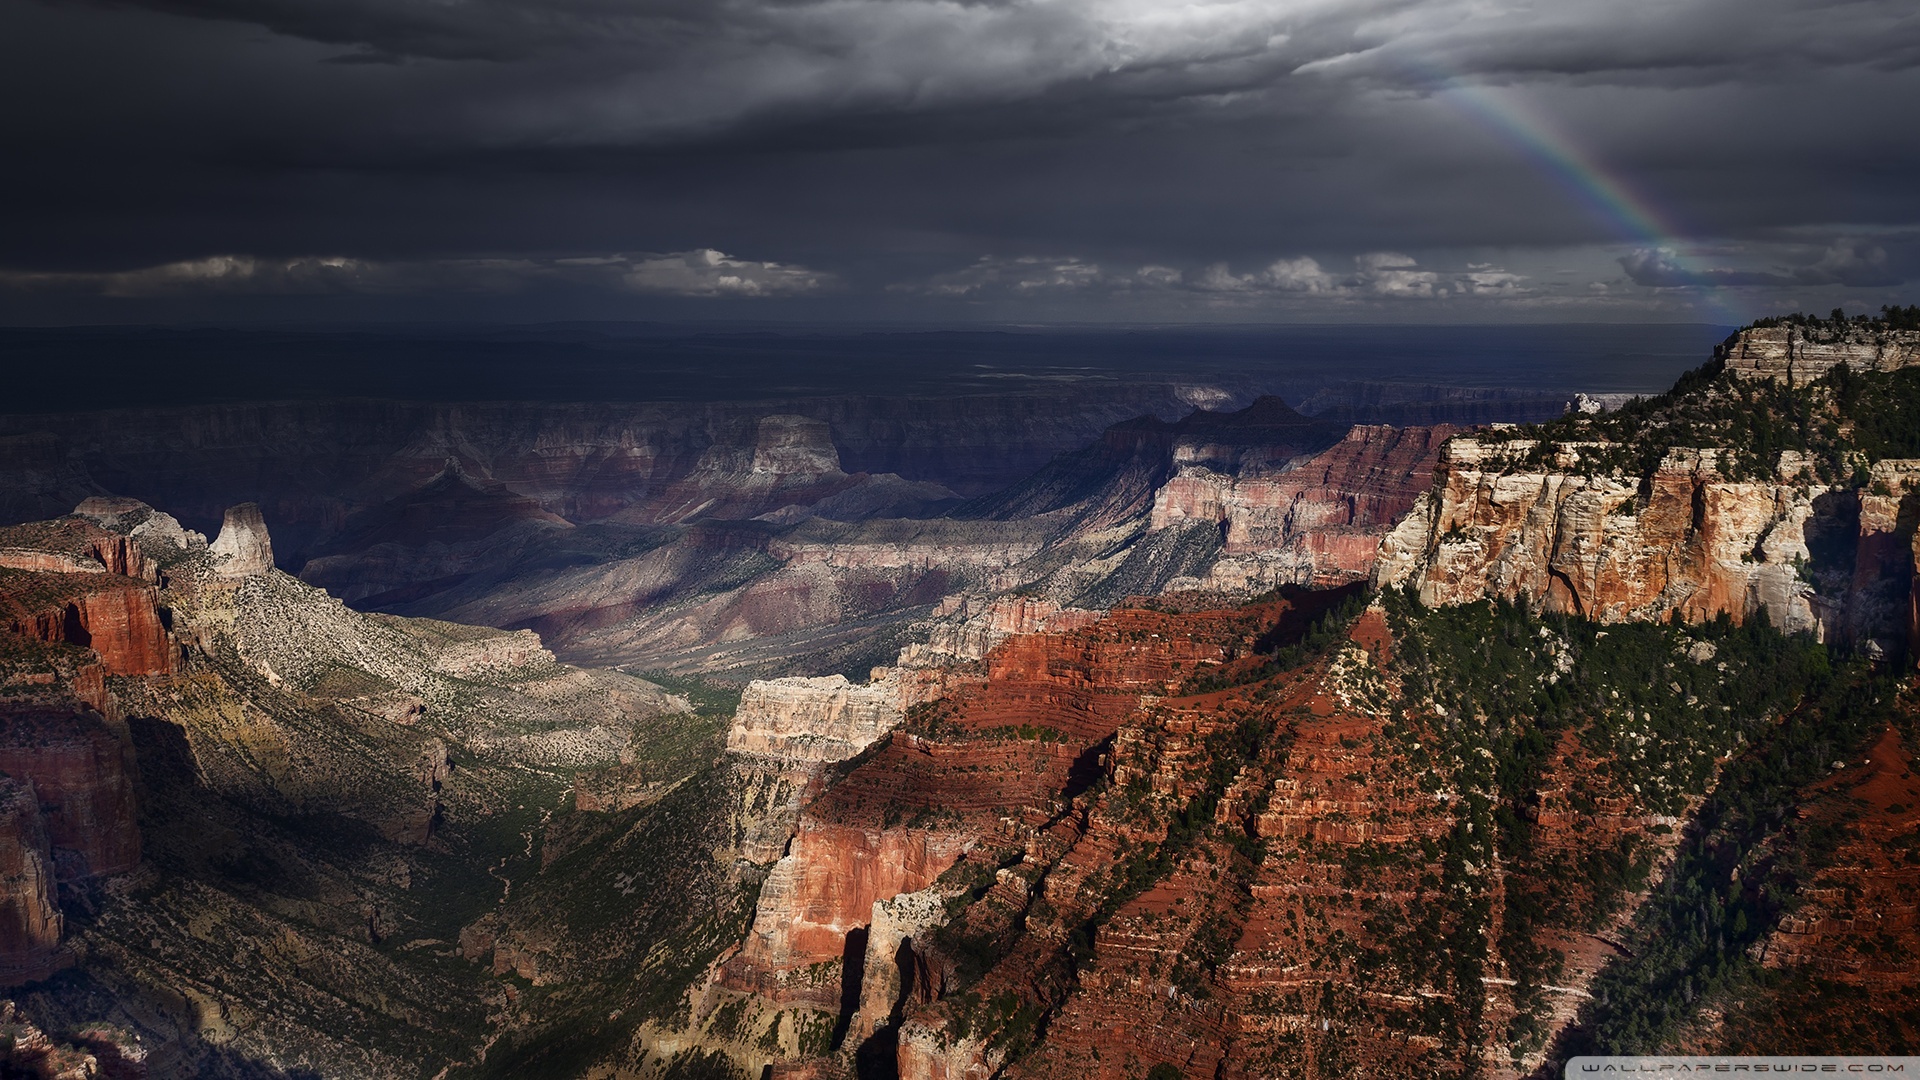 Download 21 arizona-wallpaper-hd Grand-Canyon-Mountain-in-Arizona-State-of-USA-HD-Tourist-.jpg